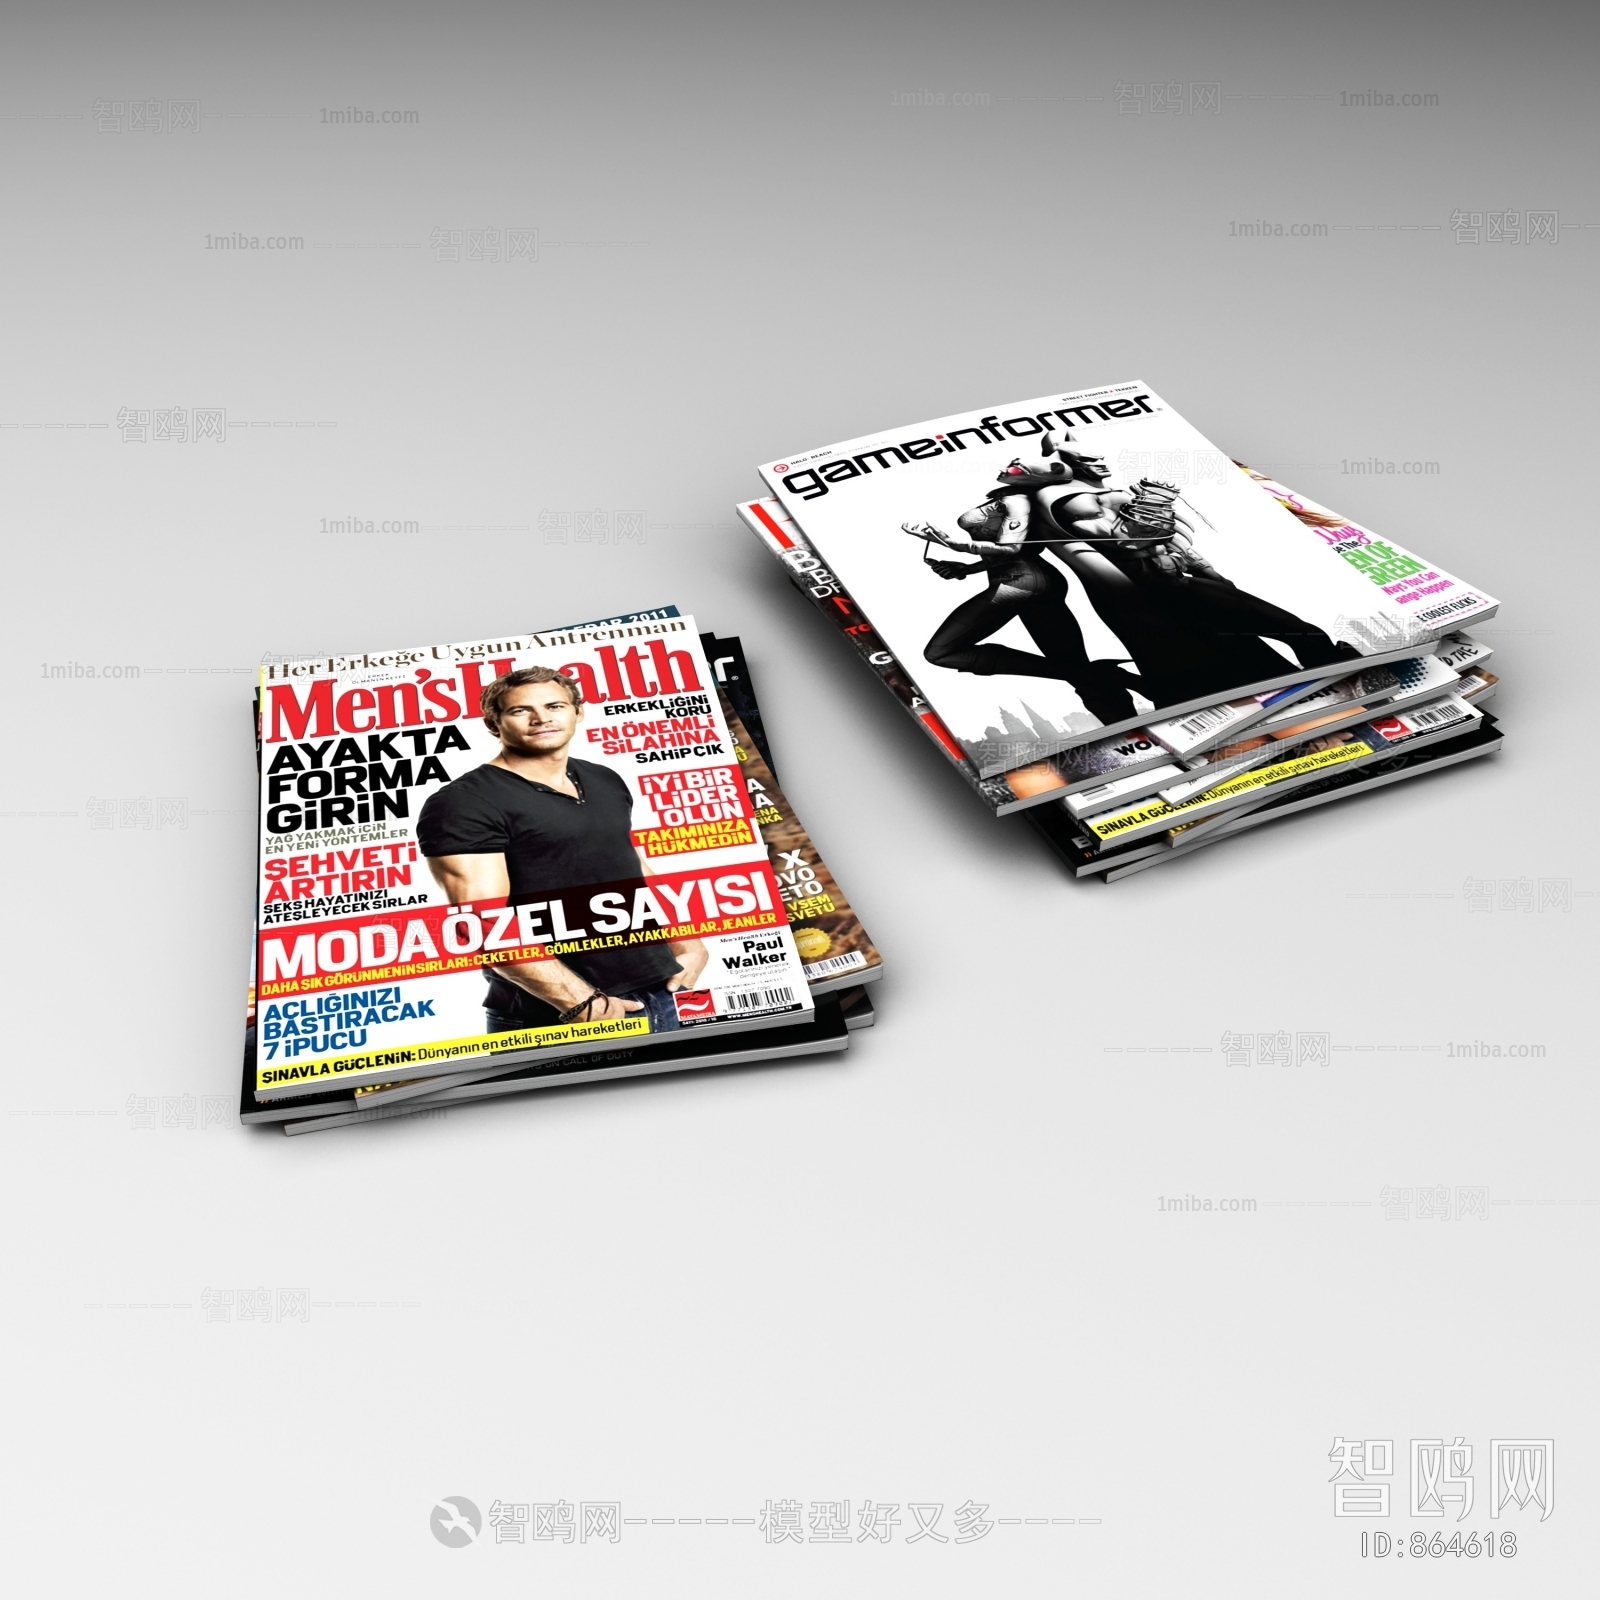 Modern Magazines/Newspapers